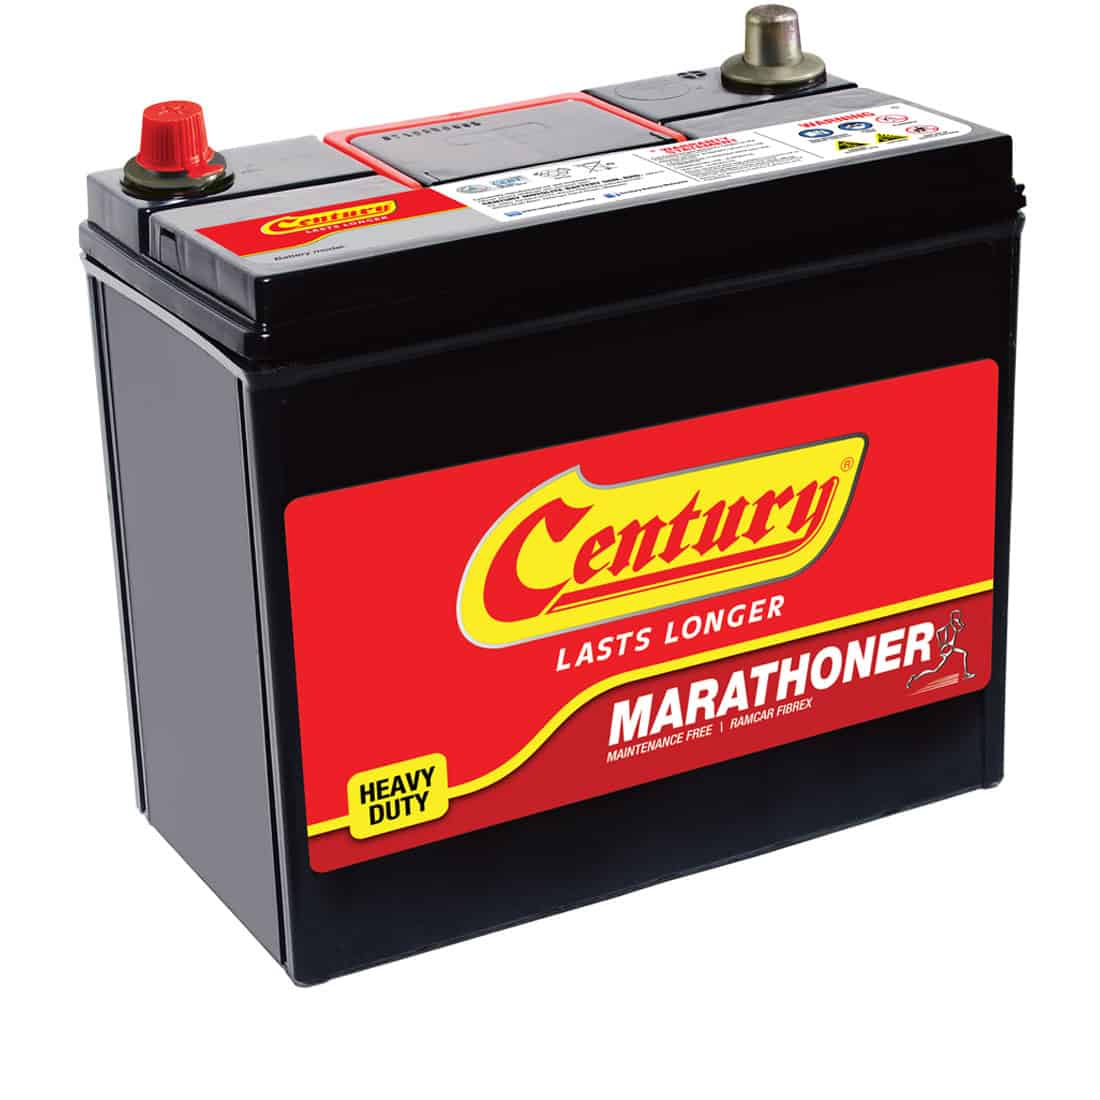 Century Marathoner - Century Battery Malaysia